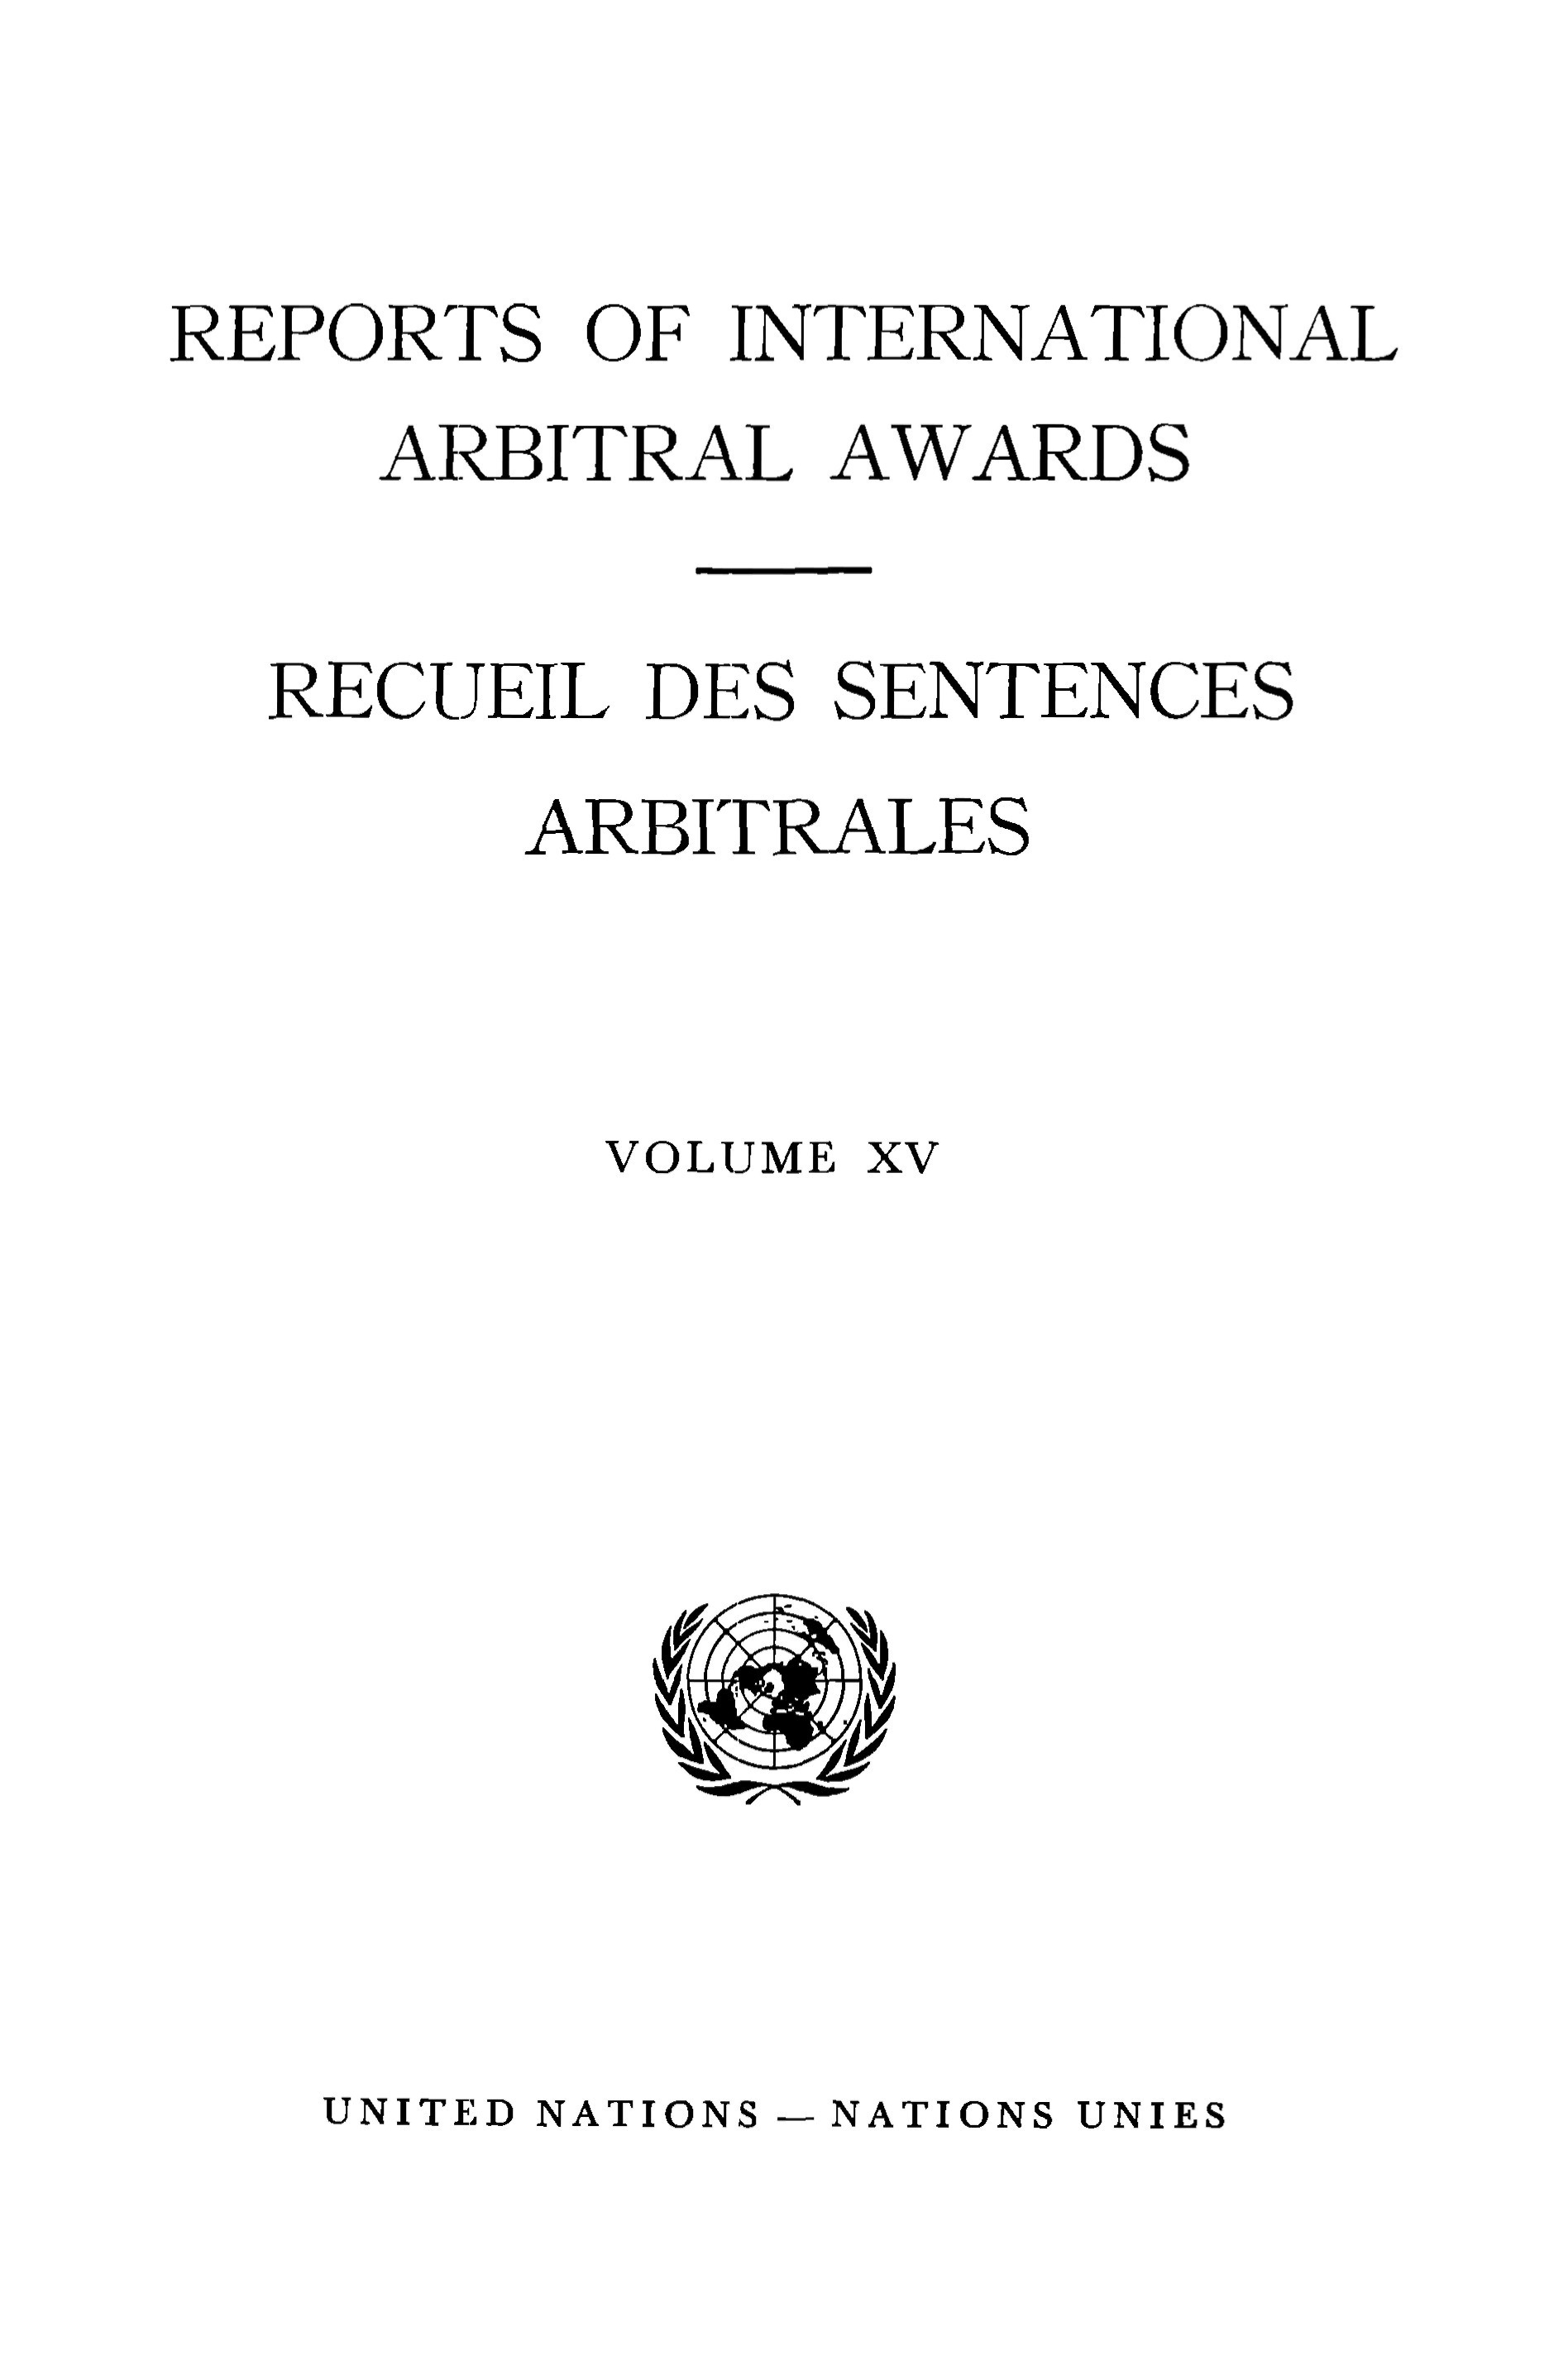 image of Reports of International Arbitral Awards, Vol. XV